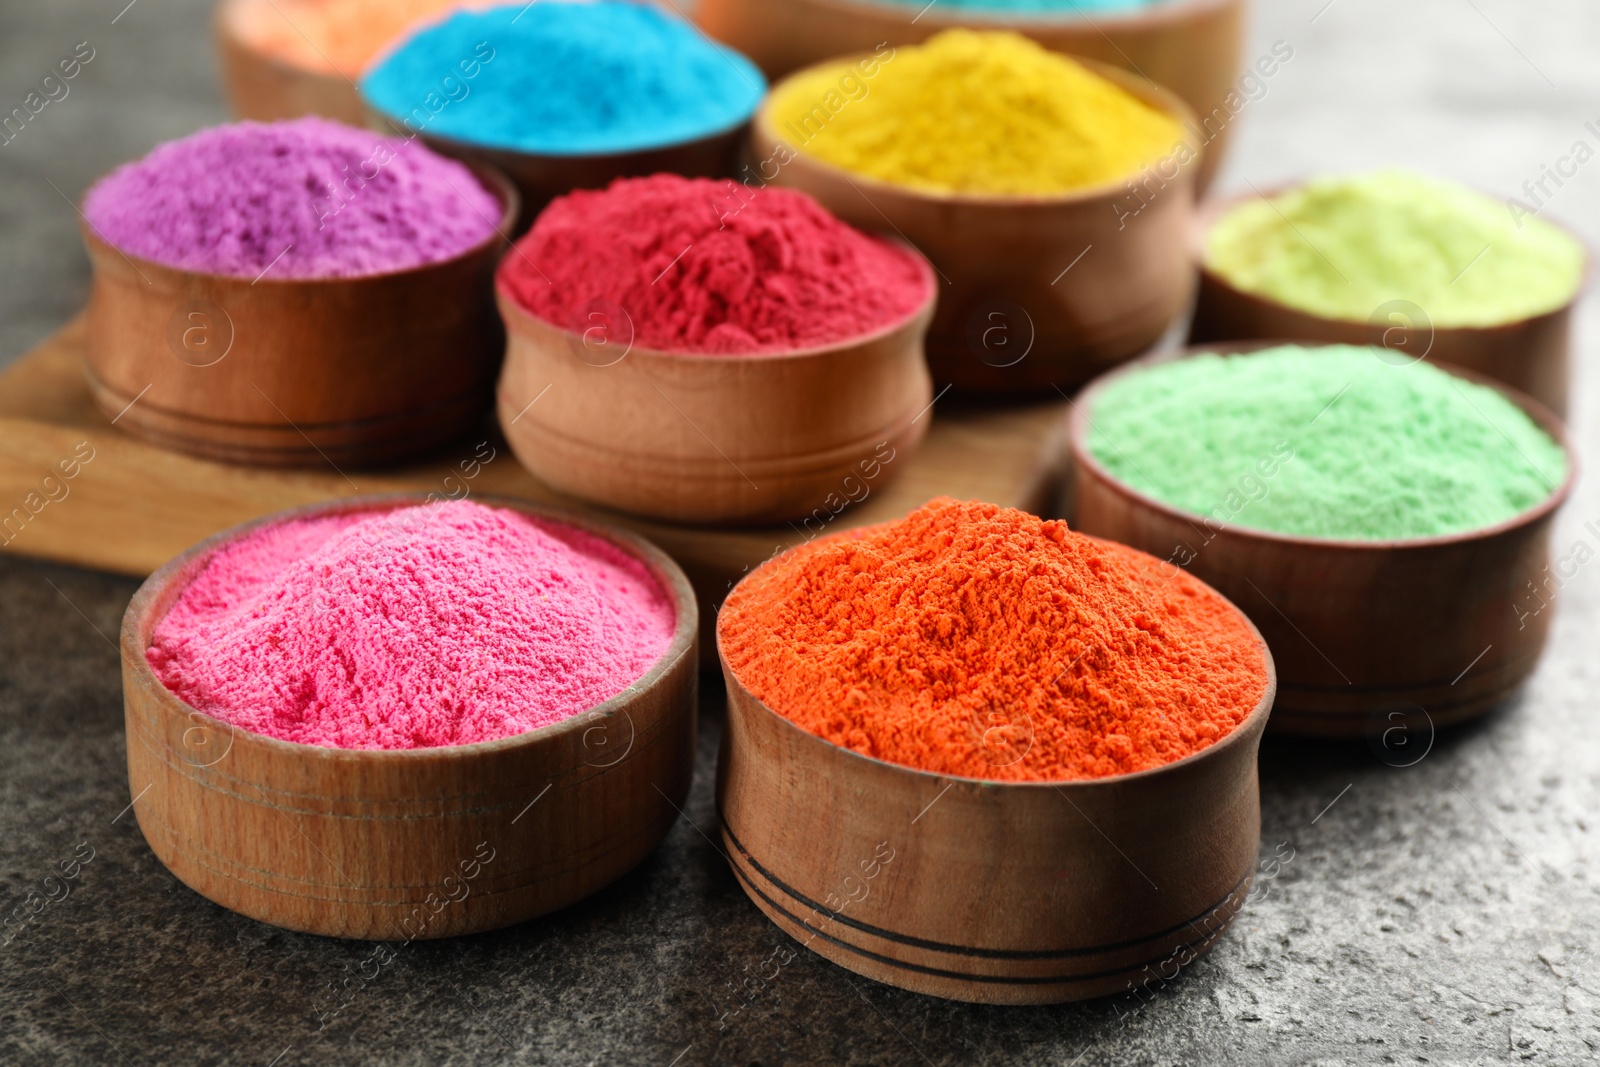 Photo of Colorful powder dyes on grey background, closeup. Holi festival